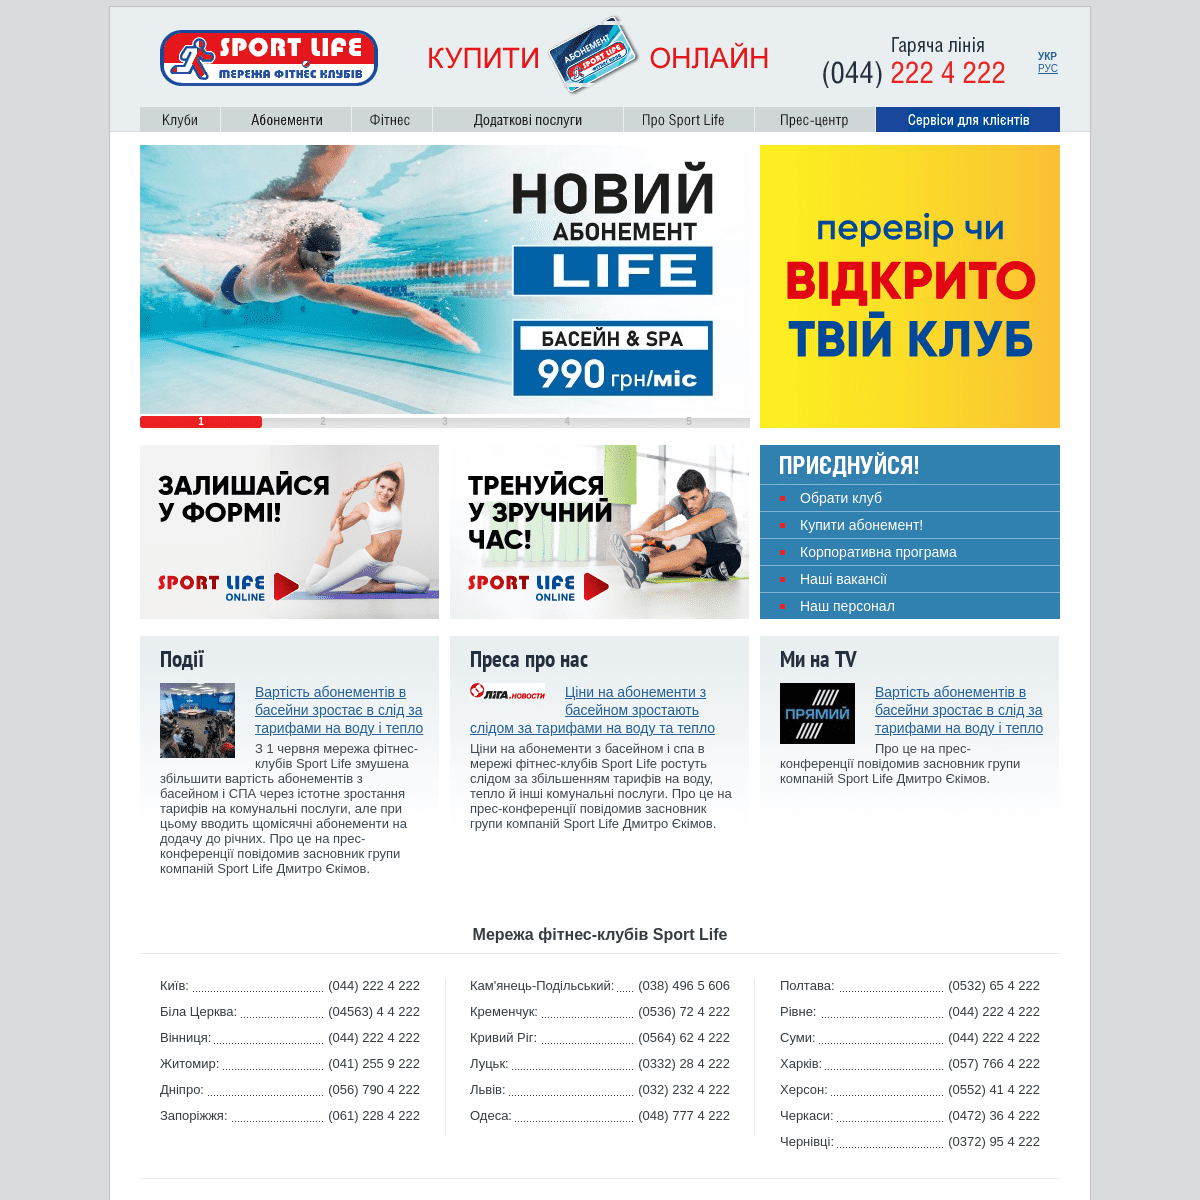 A complete backup of https://sportlife.ua